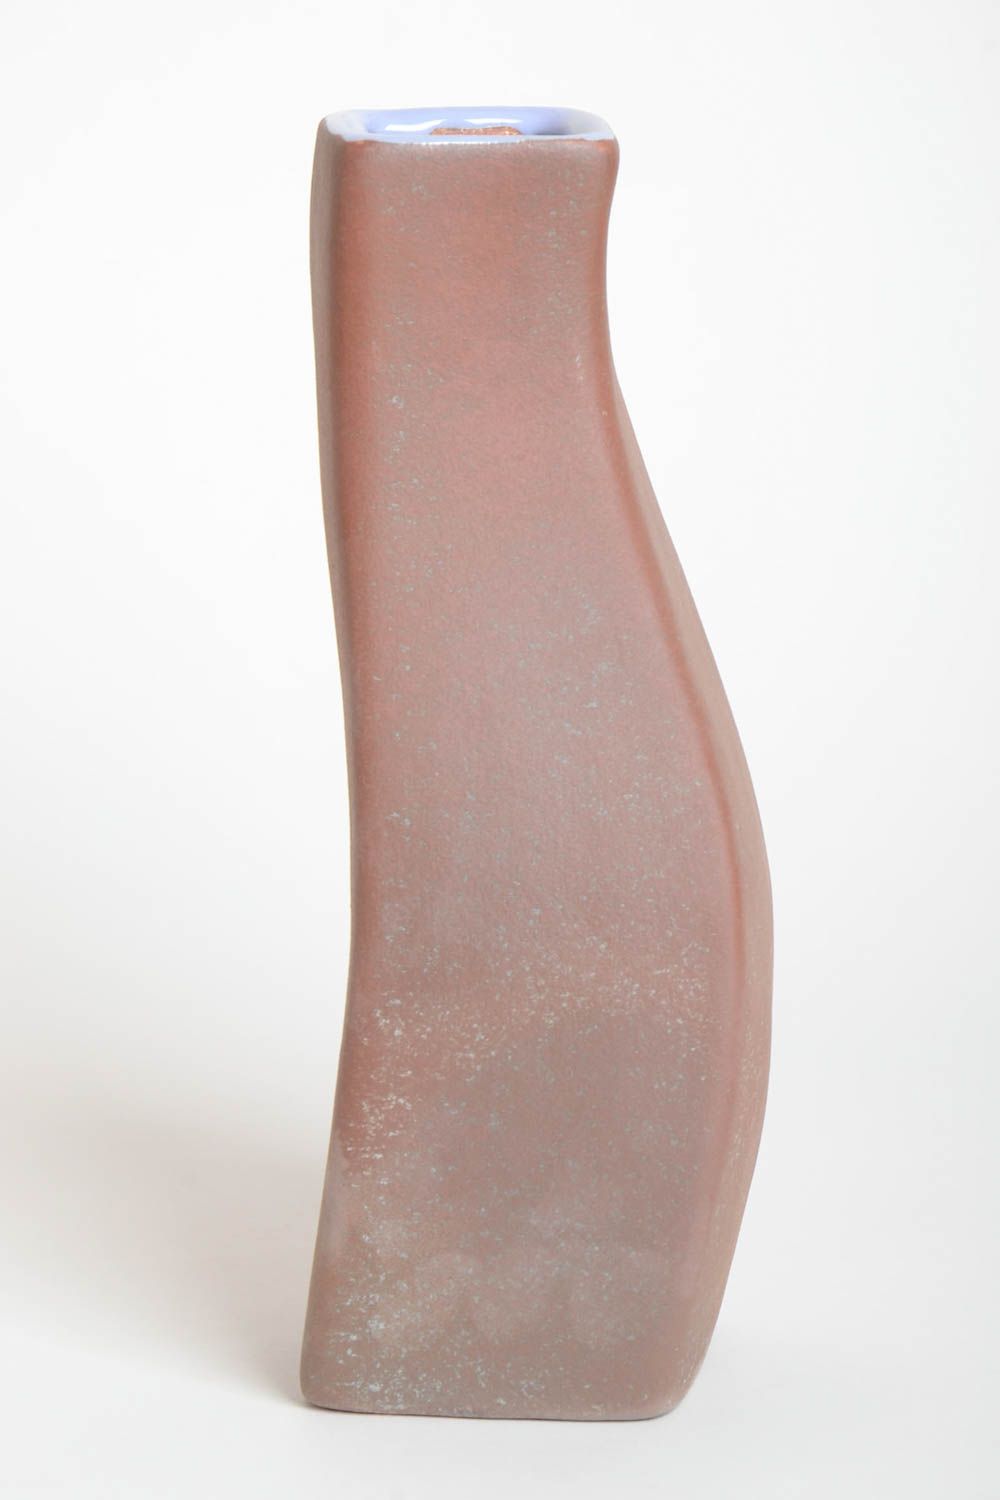 Handmade Keramik Vase schön Haus Deko hohe ausgefallene Vase 2 L bemalt foto 4